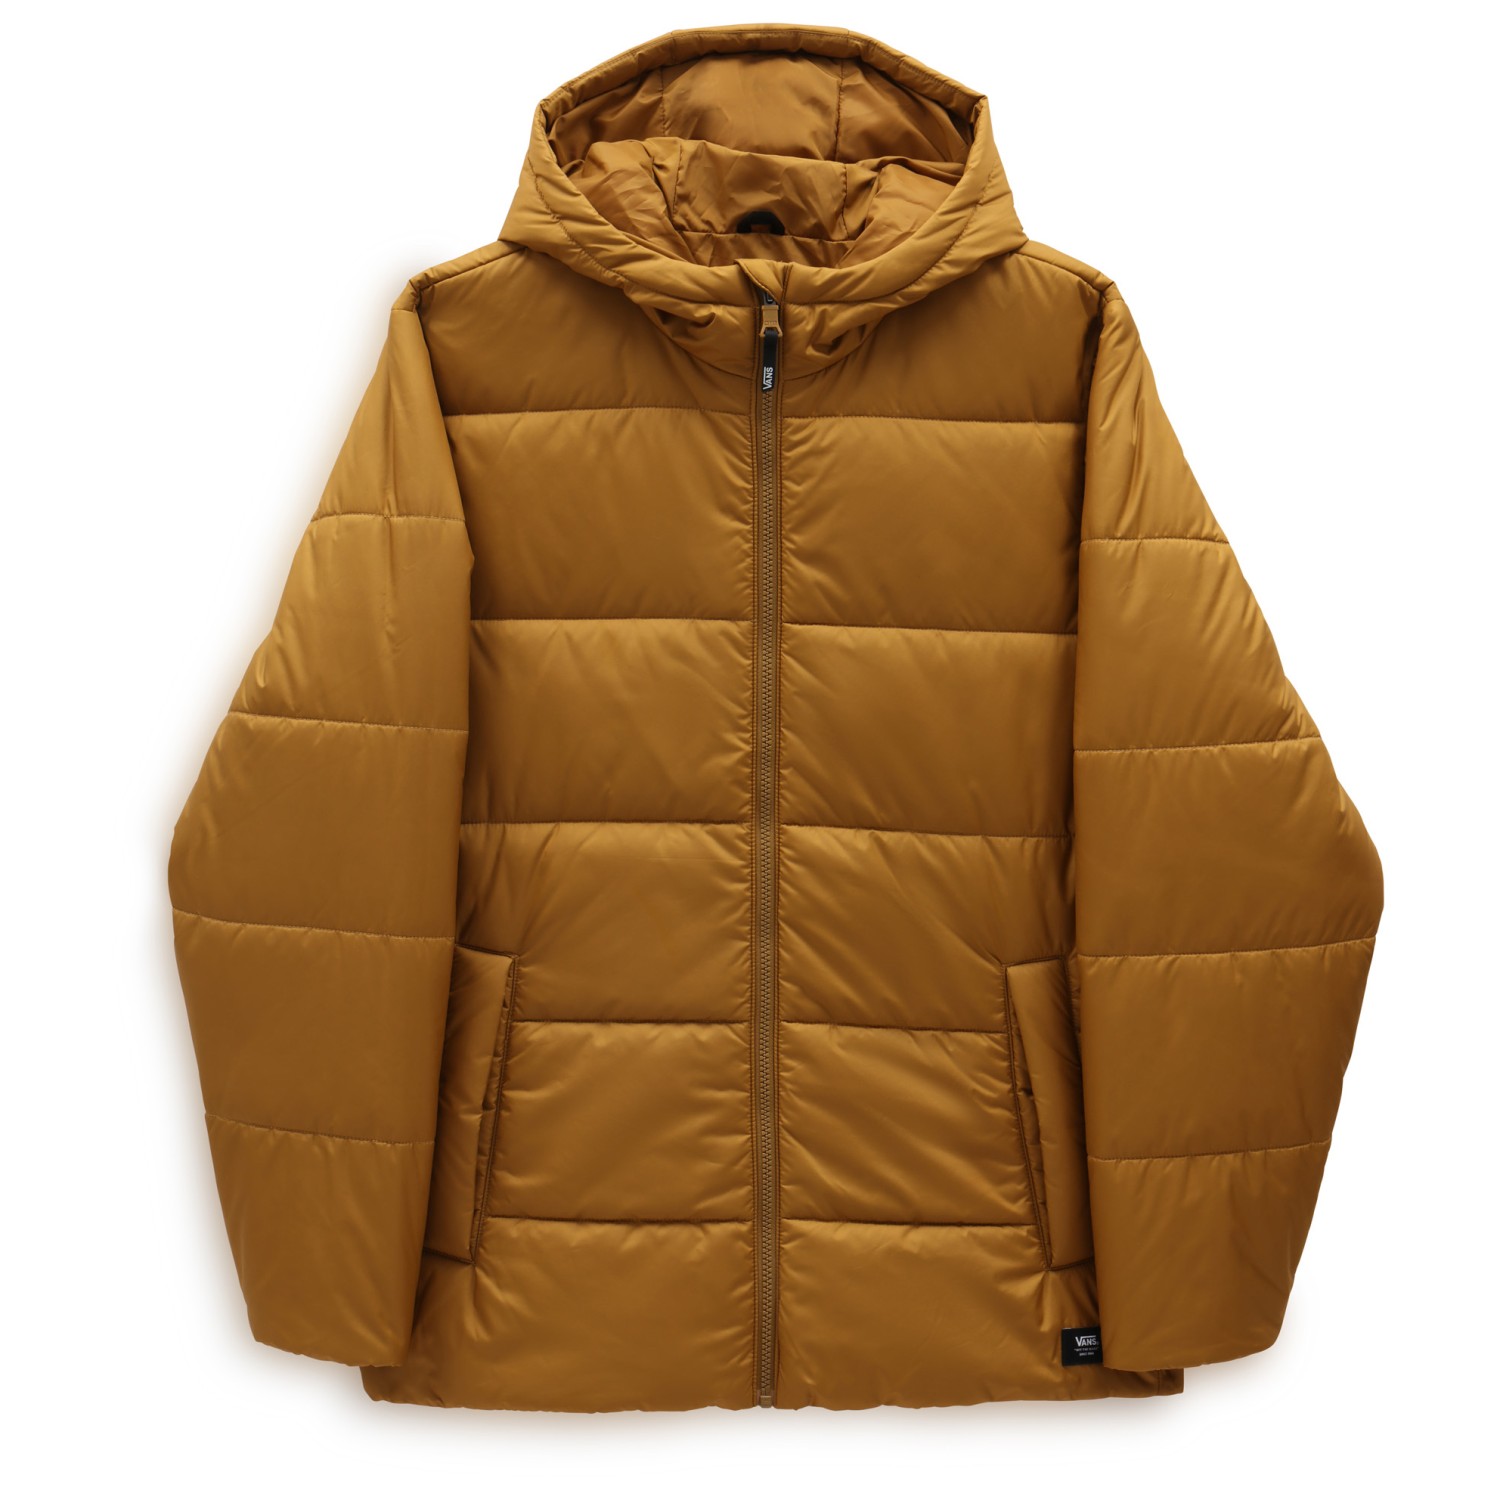 Повседневная куртка Vans Norris MTE 1 Puffer, цвет Golden Brown куртка vans prospect mte 1 puffer jacket цвет oatmeal dress blues